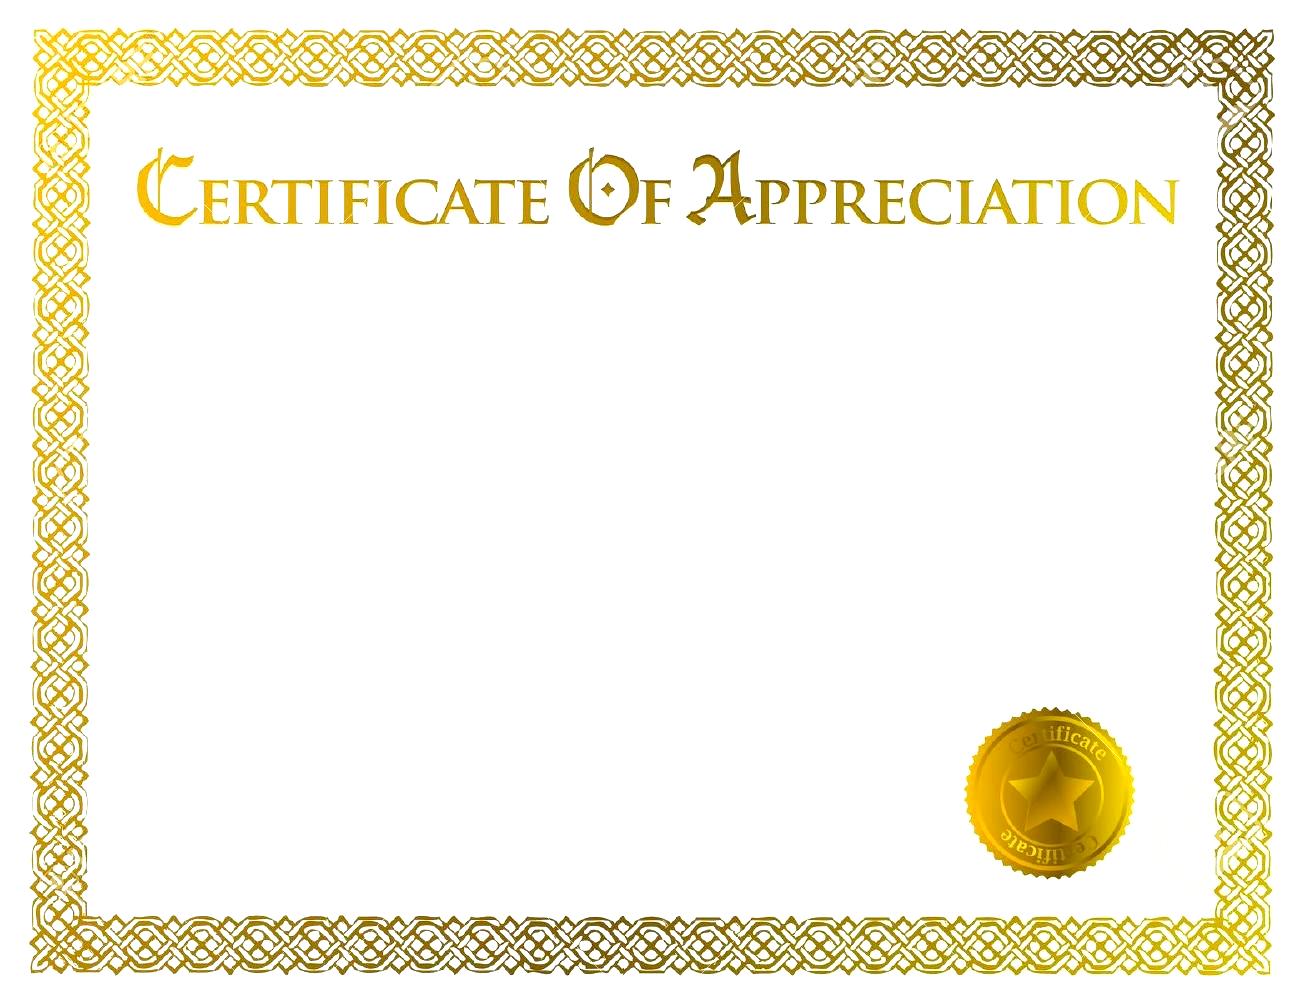 Blank Certificate Of Appreciation Templates
 Blank Certificate Templates For Word Free